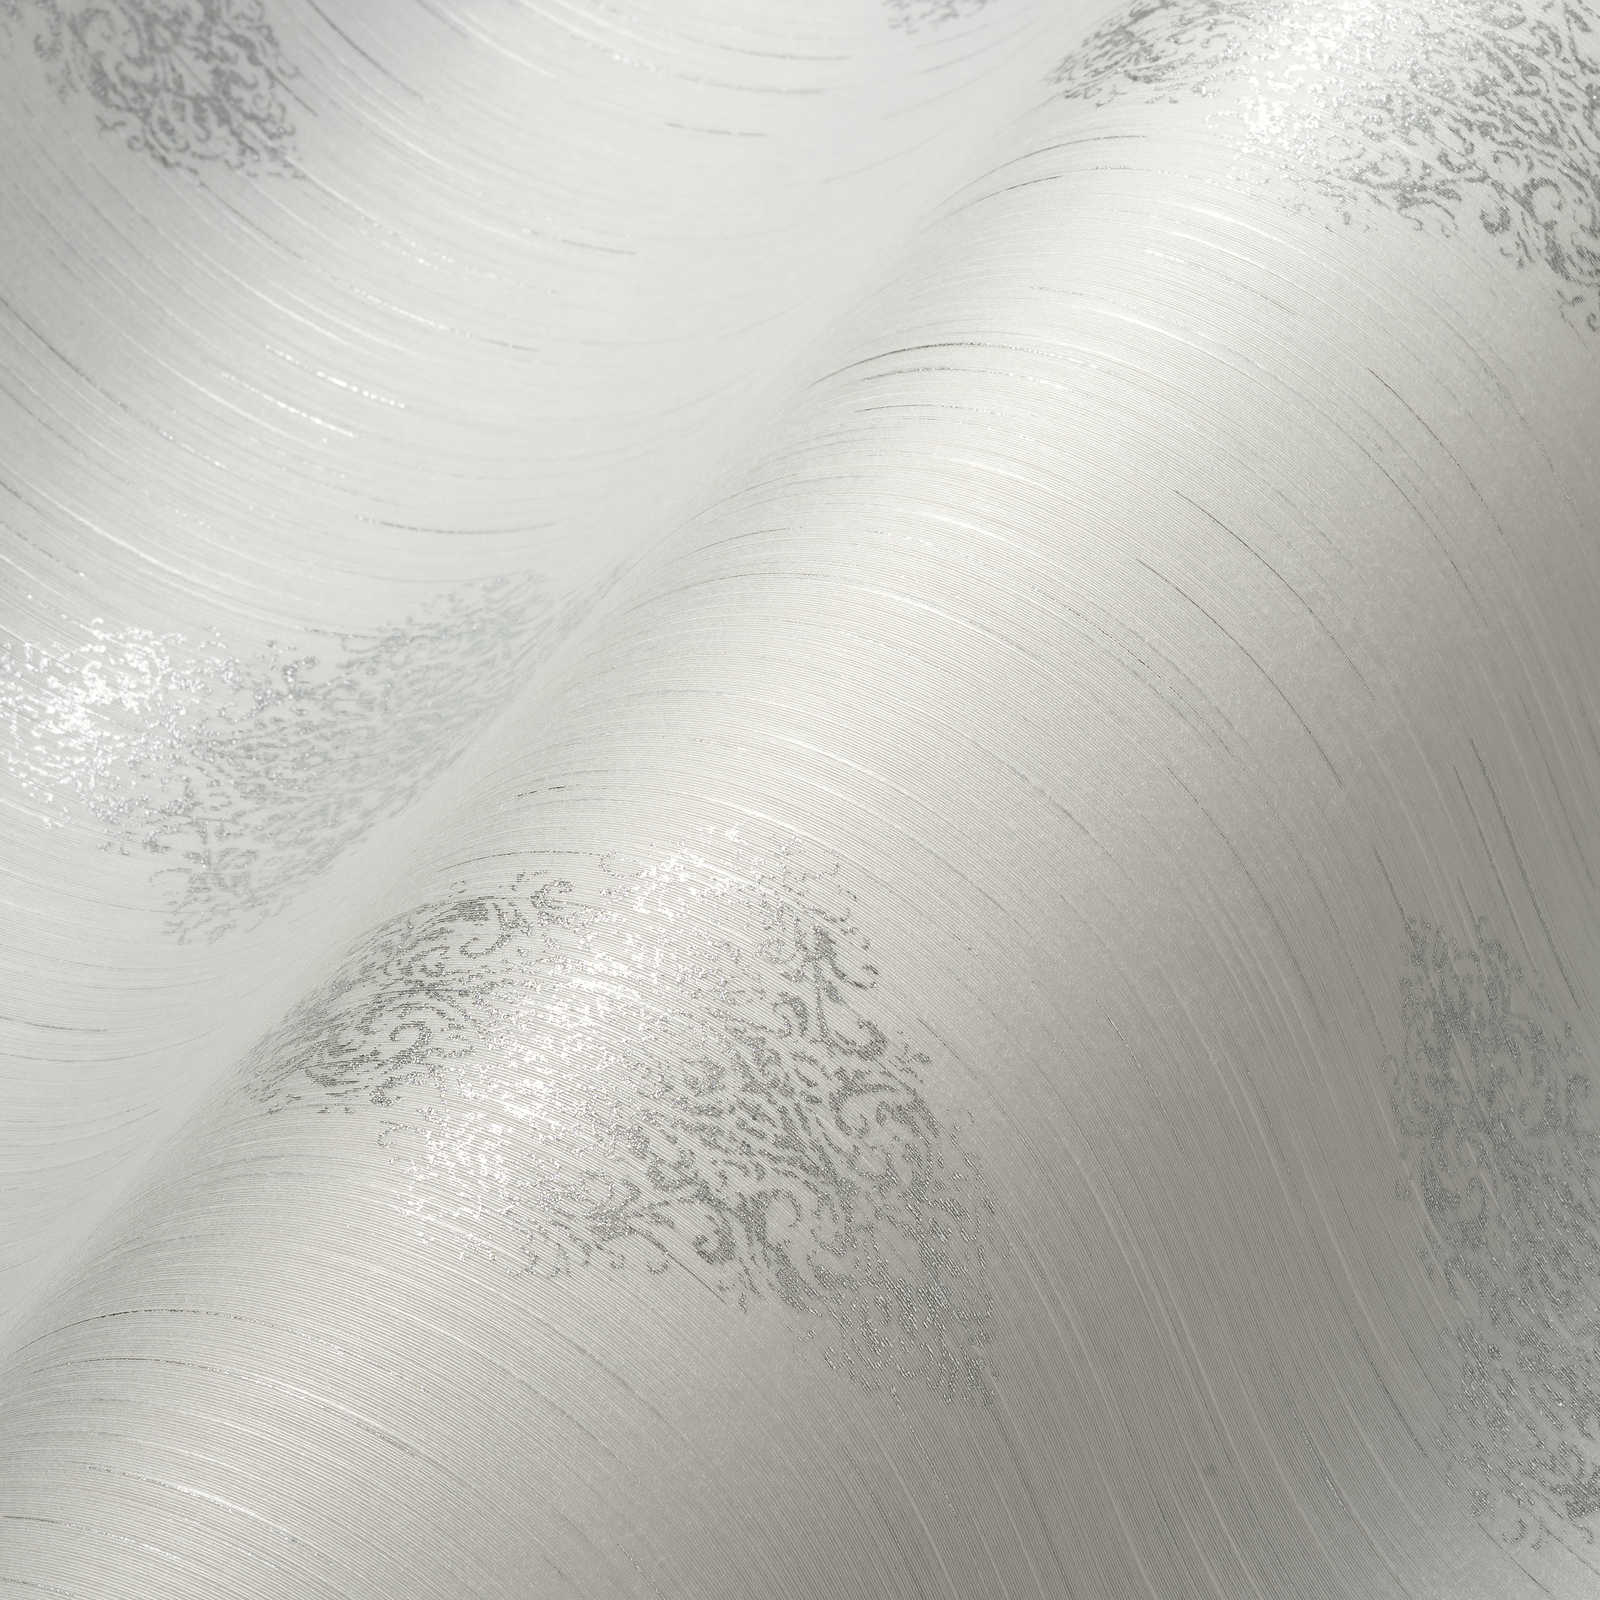             papel pintado de diseño en aspecto usado, efecto metálico - blanco, plata
        